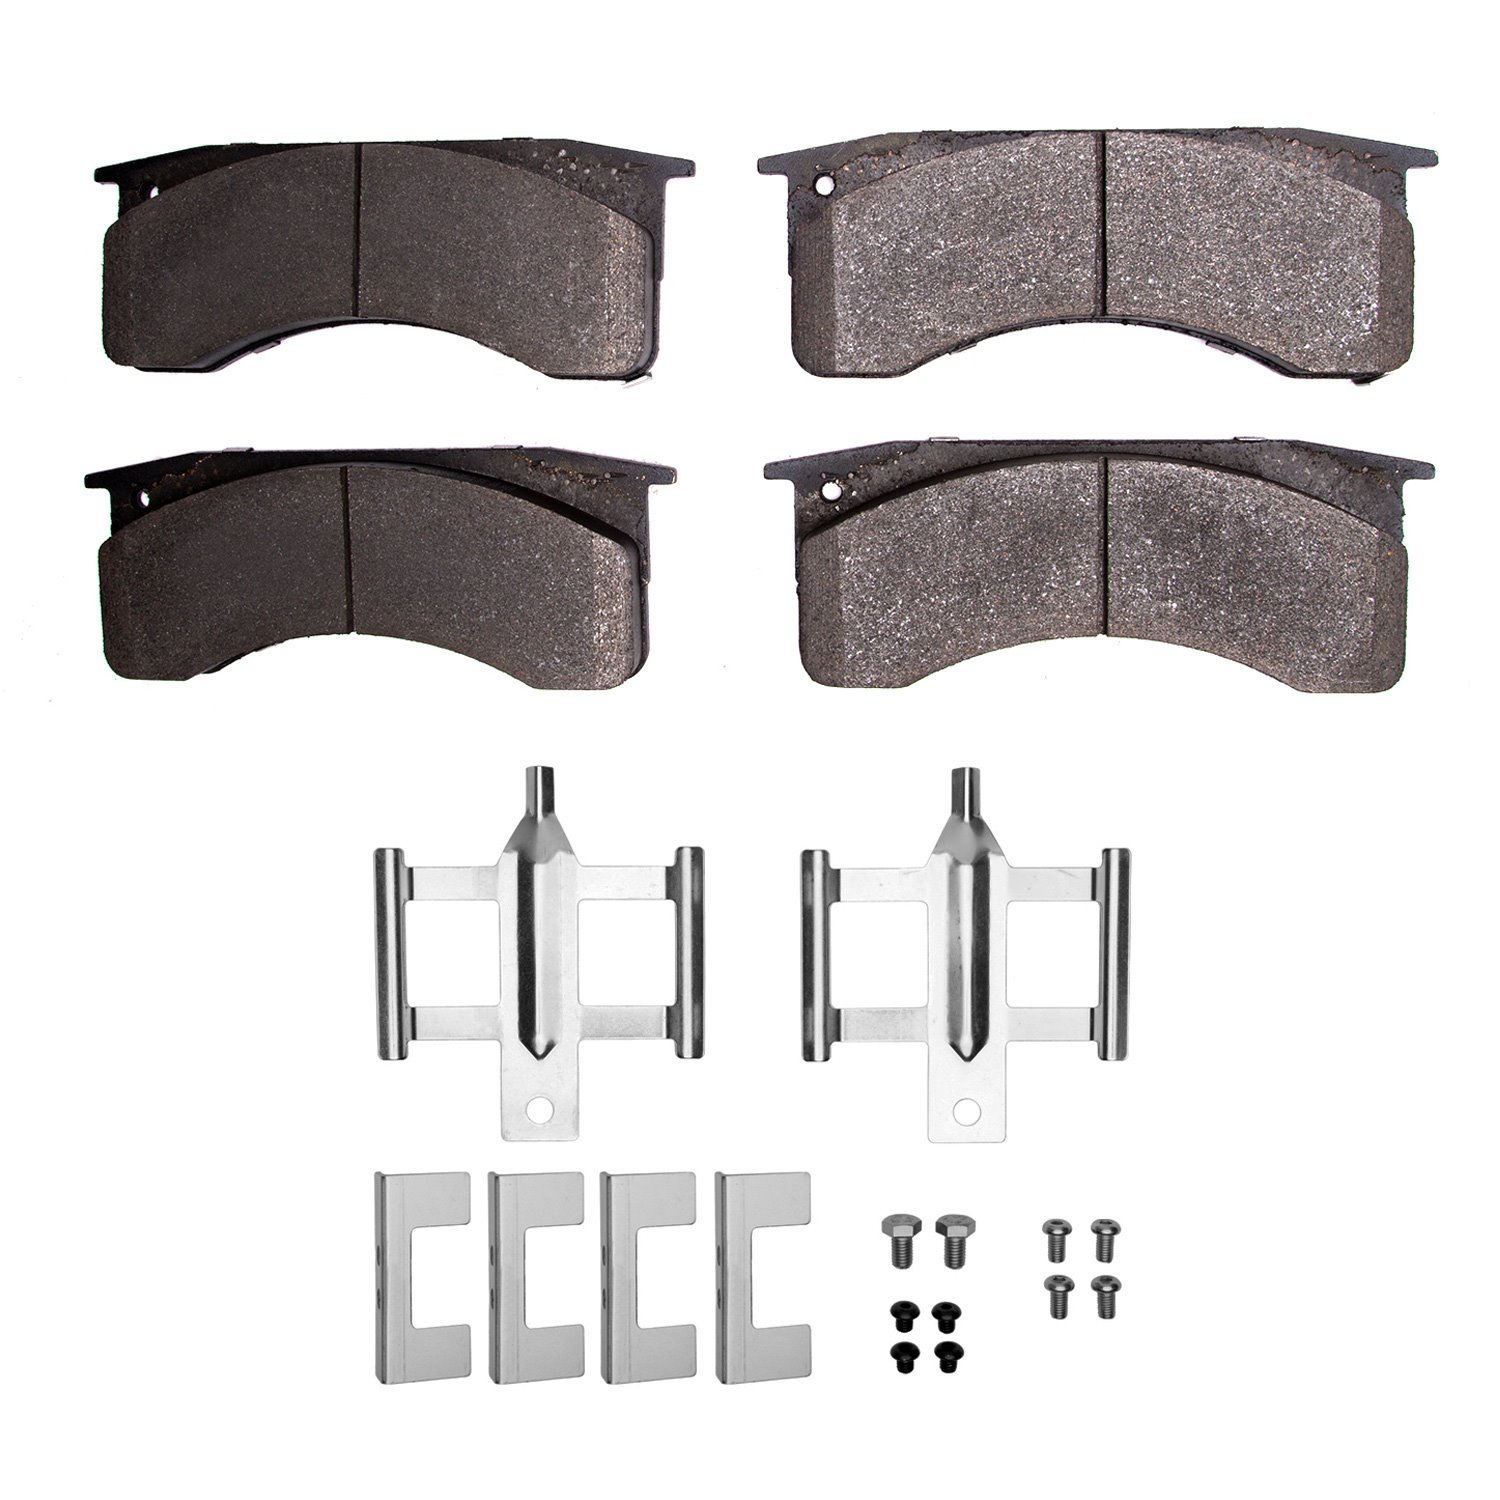 Optimum OE Brake Pads & Hardware Kit, Fits Select Fits Multiple Makes/Models, Position: Front & Rear